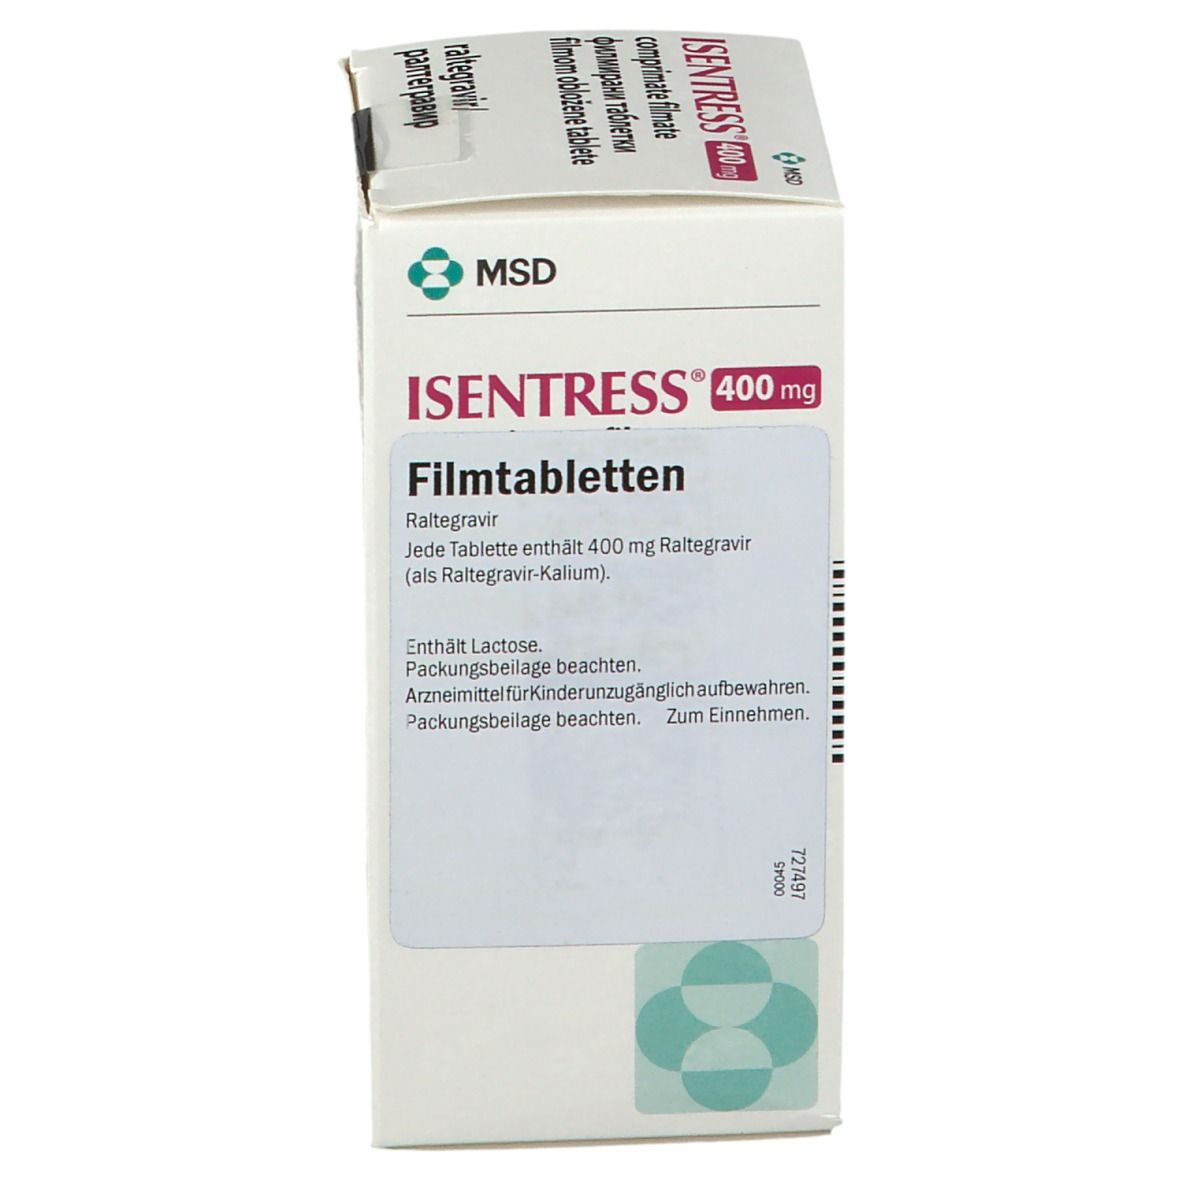 Isentress 400 mg